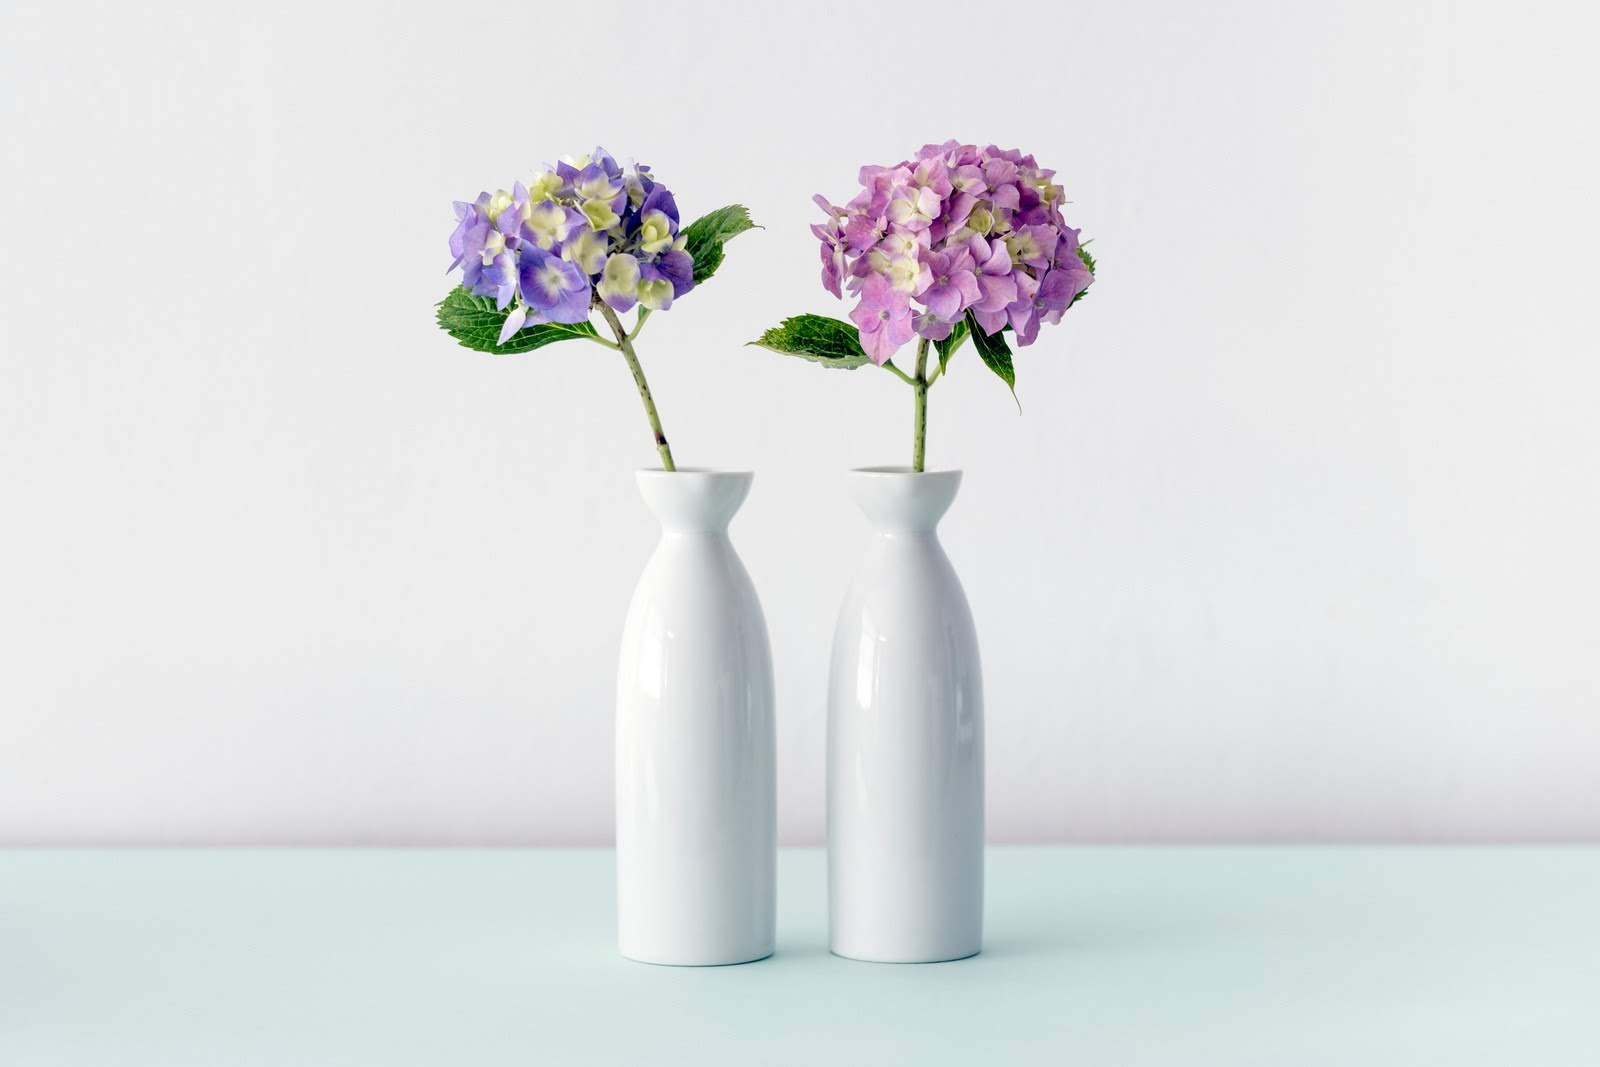 Two Hydrangea Vases | Photo by Maarten Deckers via Unsplash